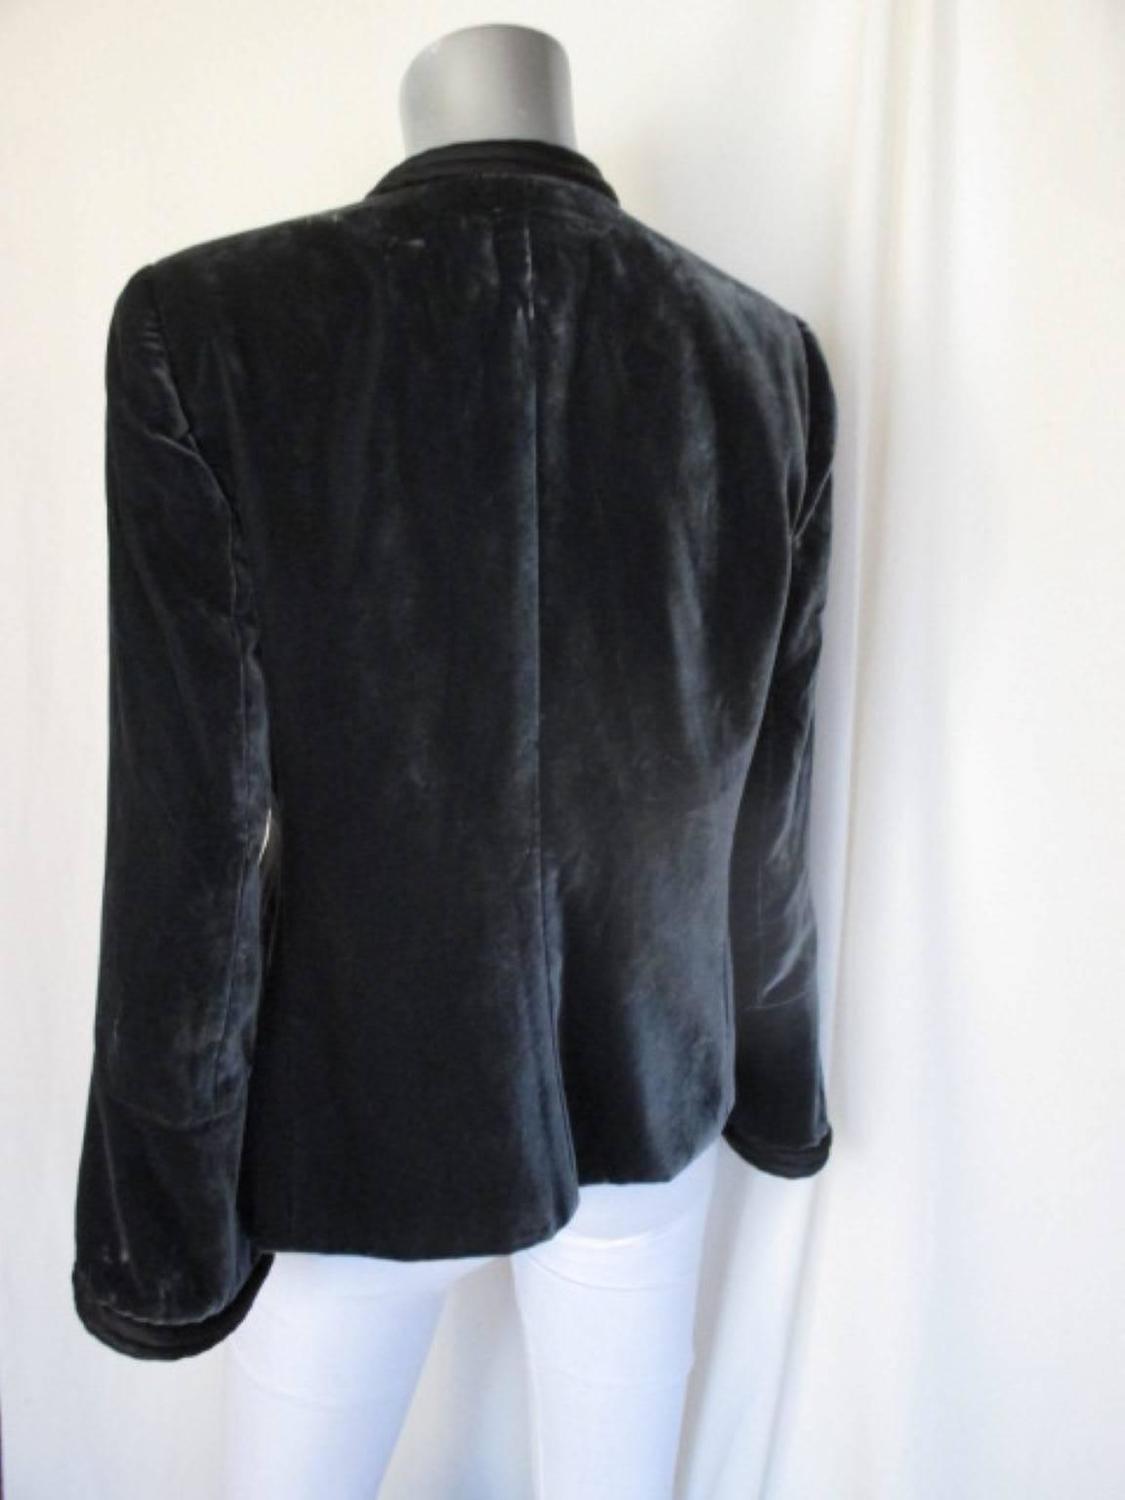 armani collezioni silver/grey velvet jacket For Sale at 1stdibs